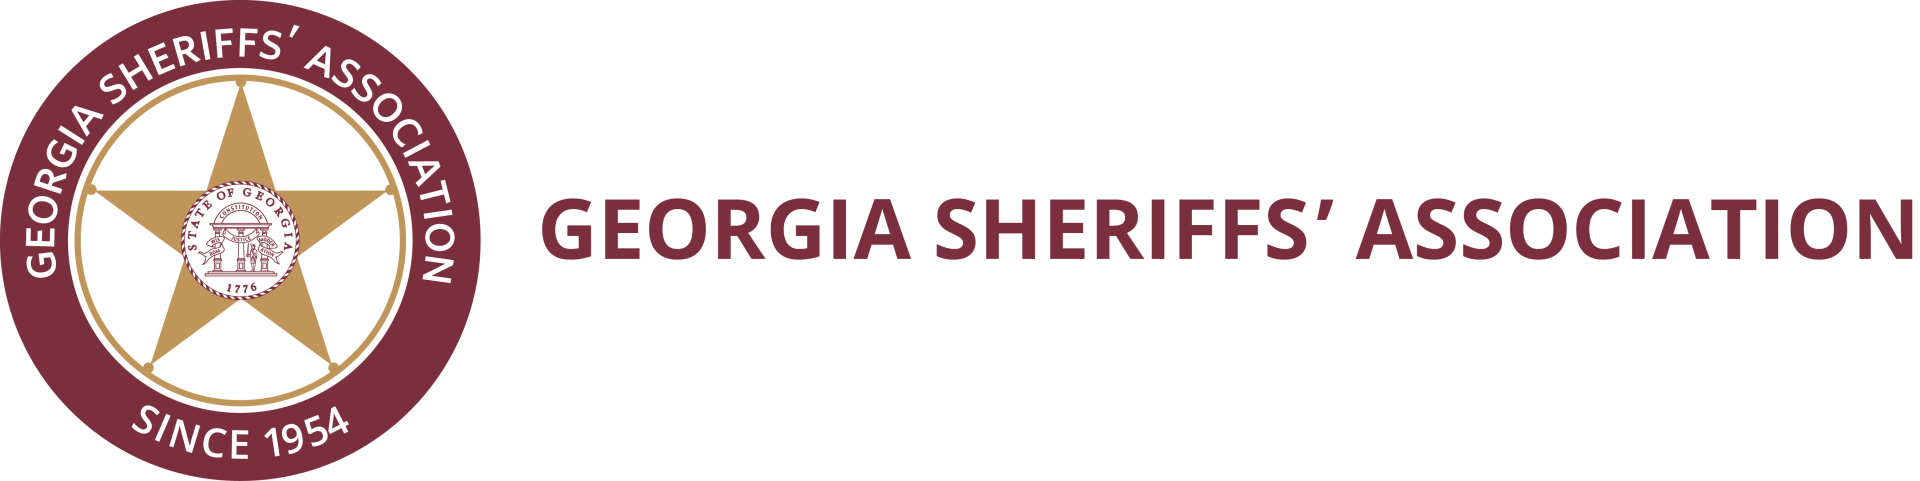 Georgia Sheriffs' Association logo